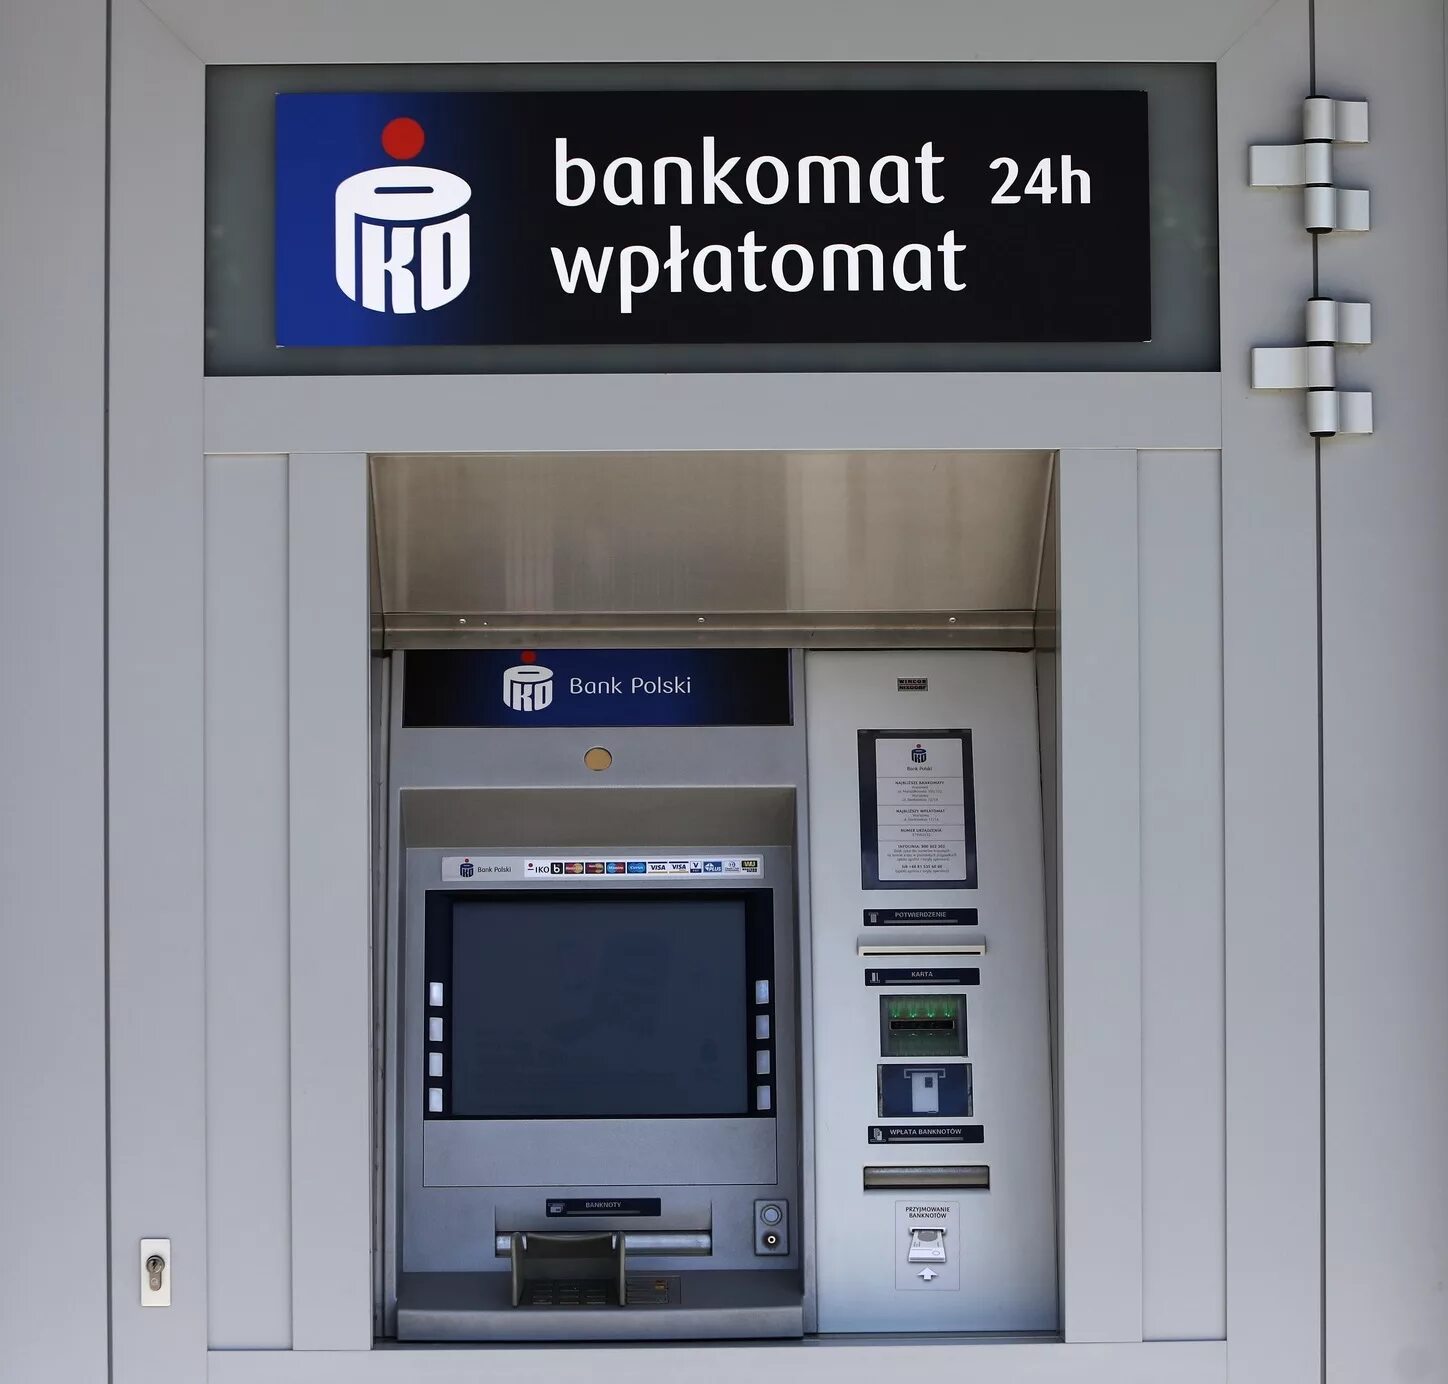 PKO Bank Polski sa. (Польша) лого. PKO Bank Polski Банкомат. Банкоматы Хорватии. Wplatomat PKO.